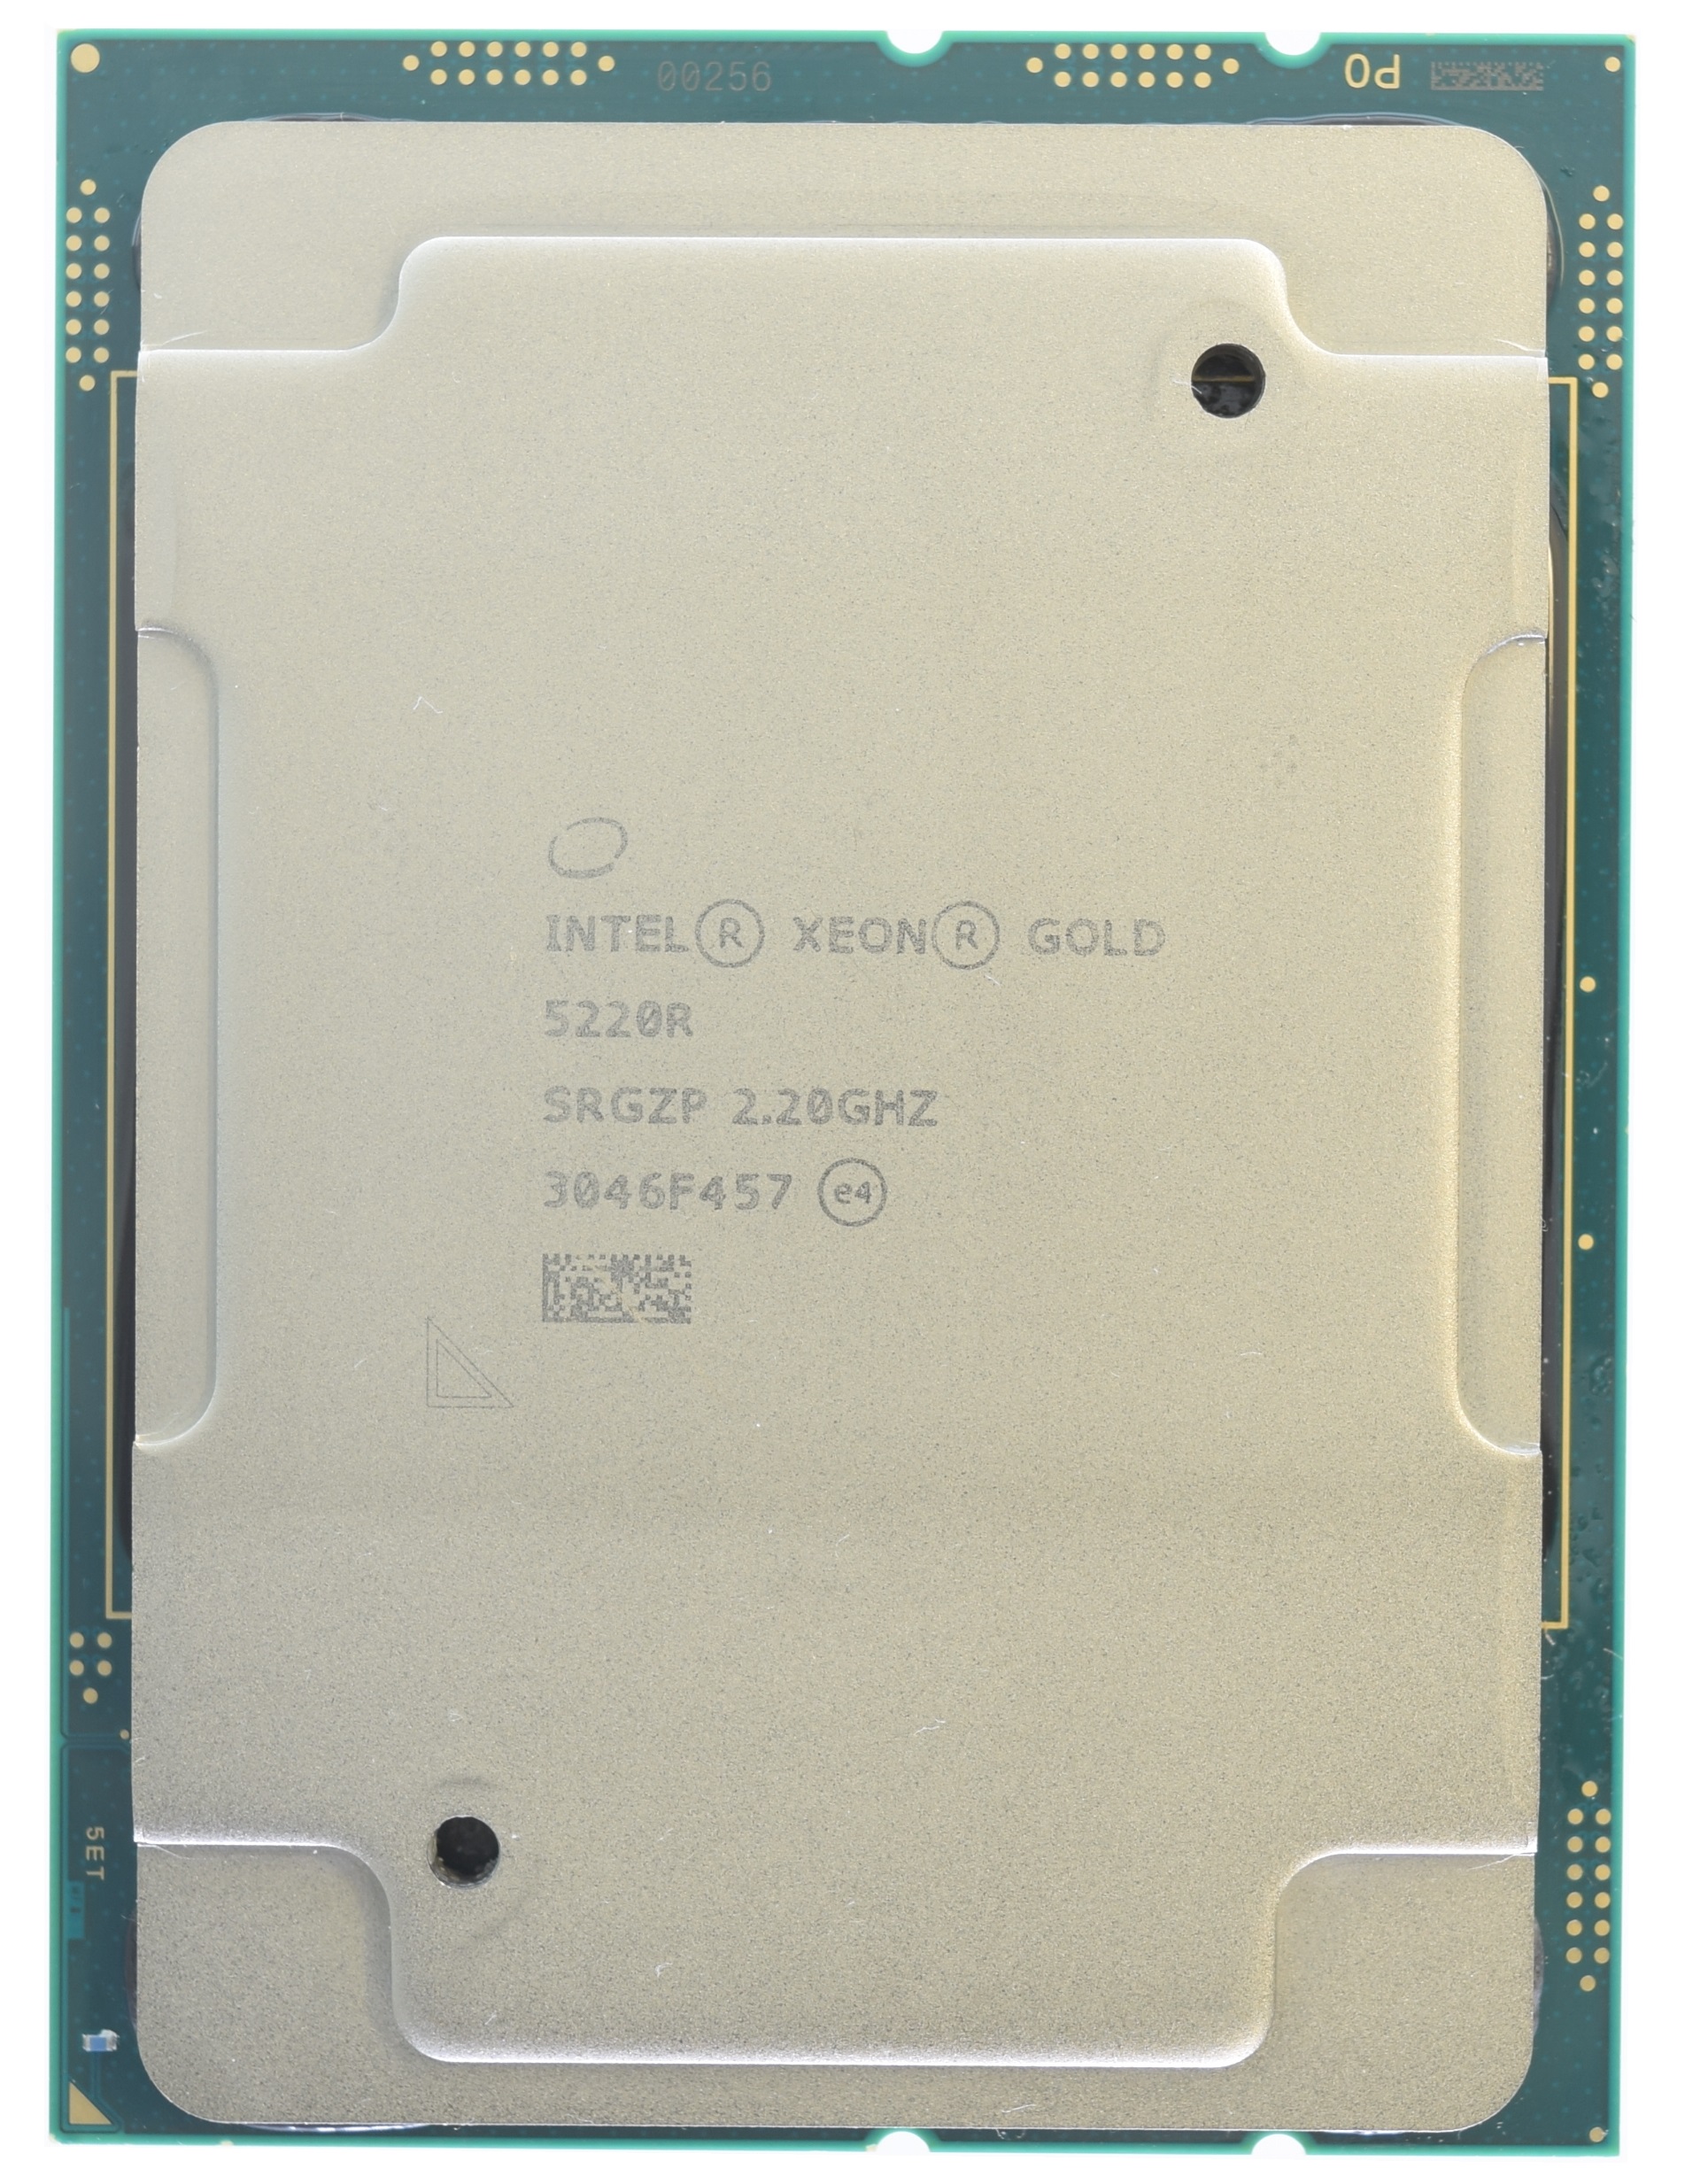 Intel Xeon Gold 5220R.